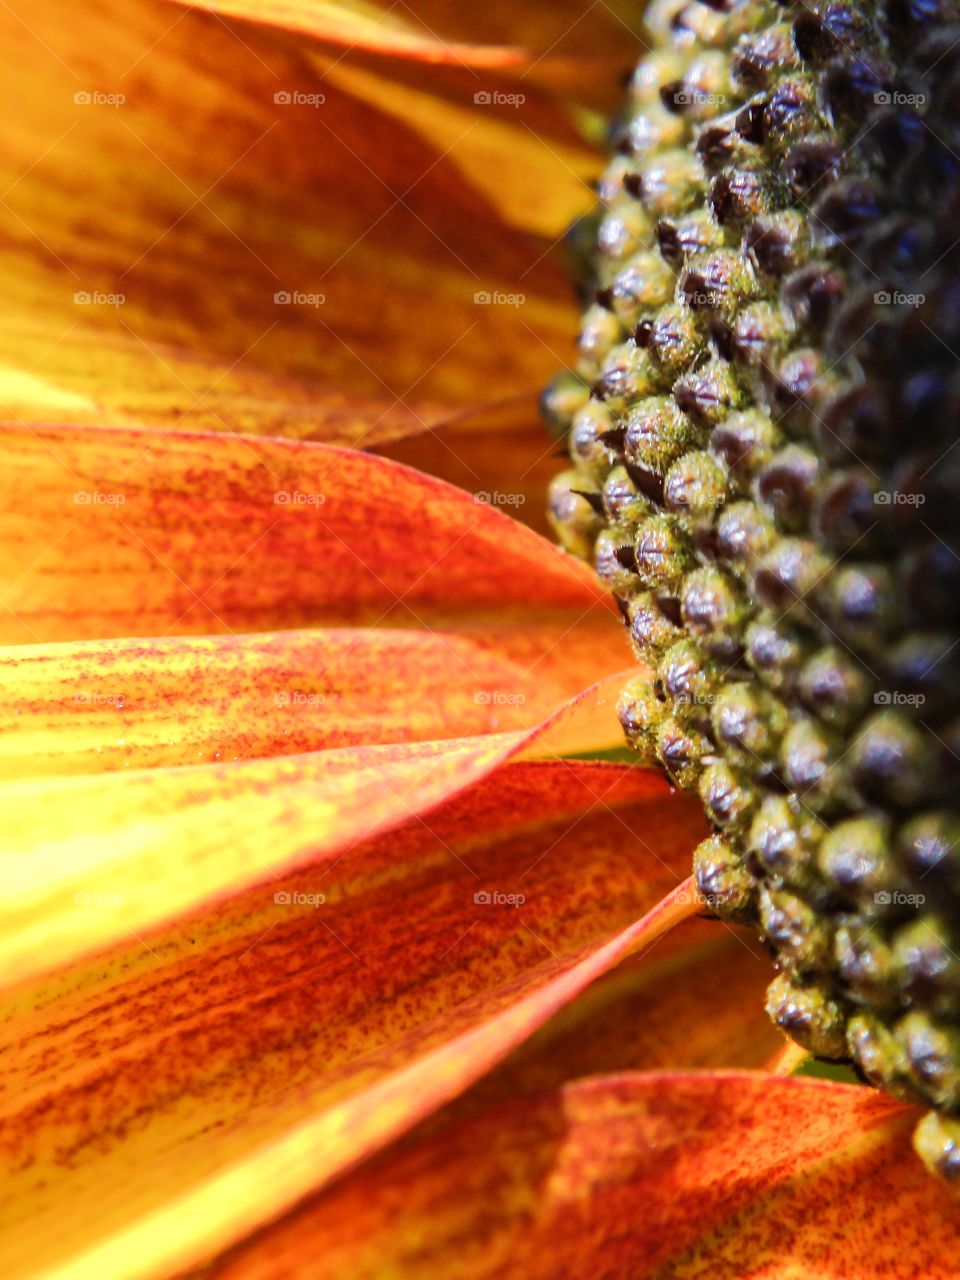 Sunflower textures 